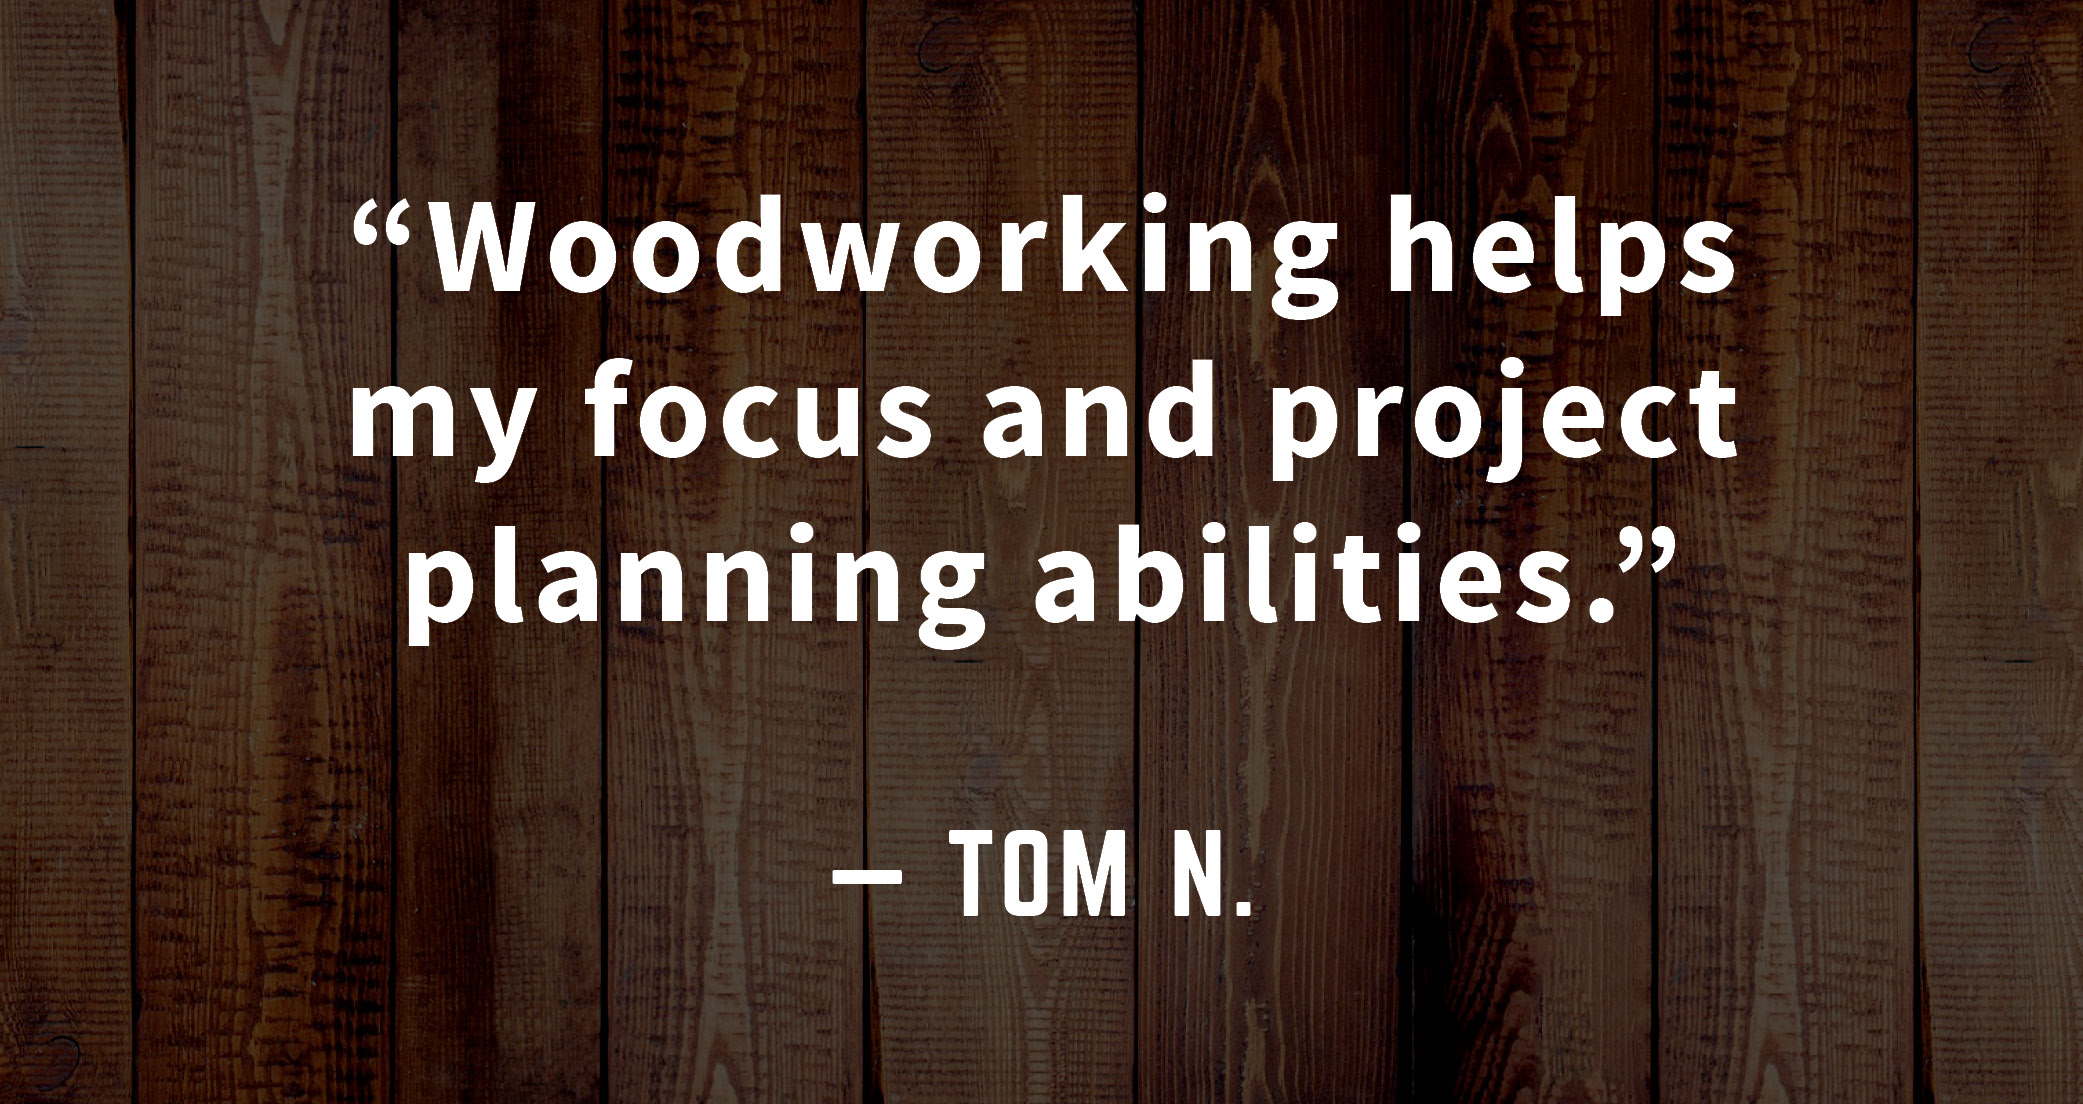 woodworking helps me focus quote